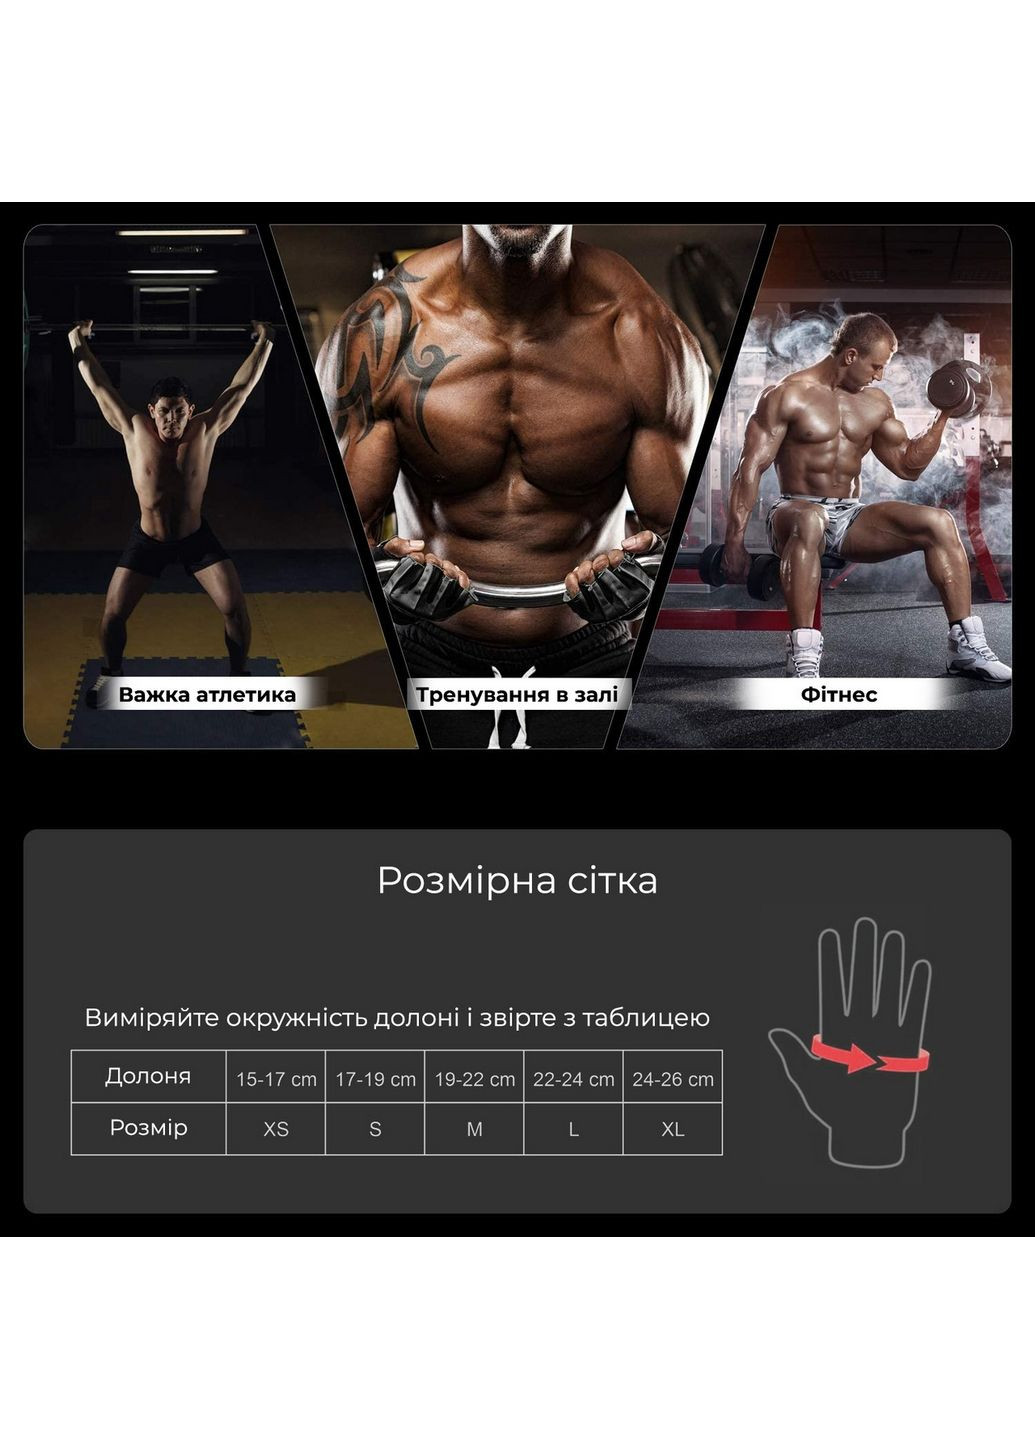 Перчатки для фитнеса PowerPlay (282584985)